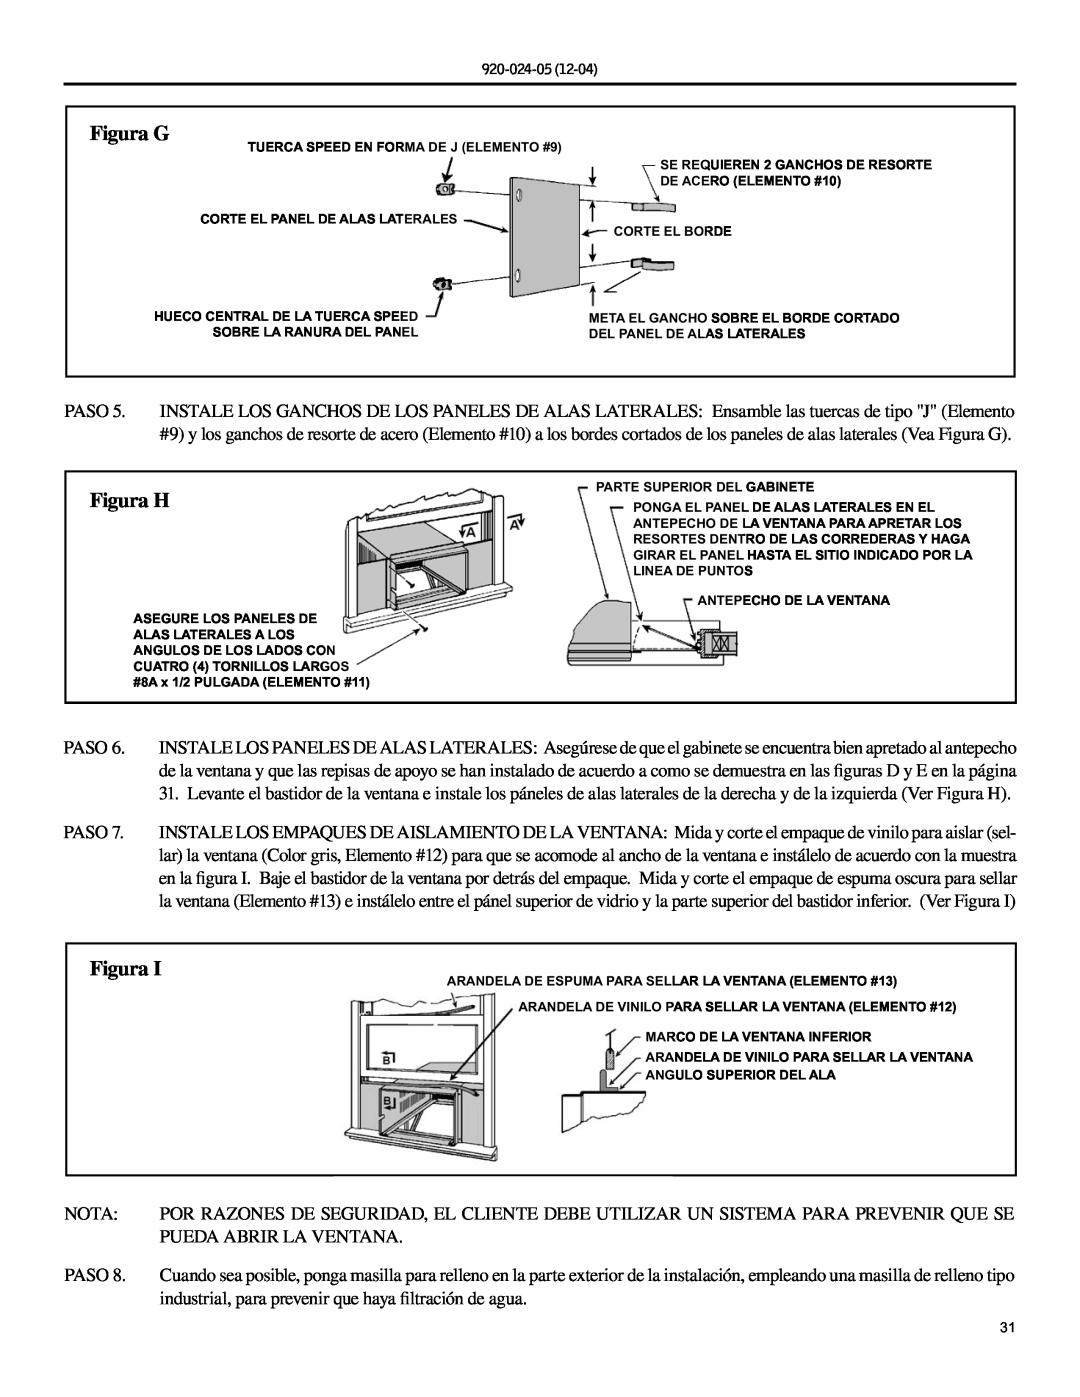 Friedrich SH20, SH15 operation manual Figura G, Figura H, Nota, Pueda Abrir La Ventana, Paso 